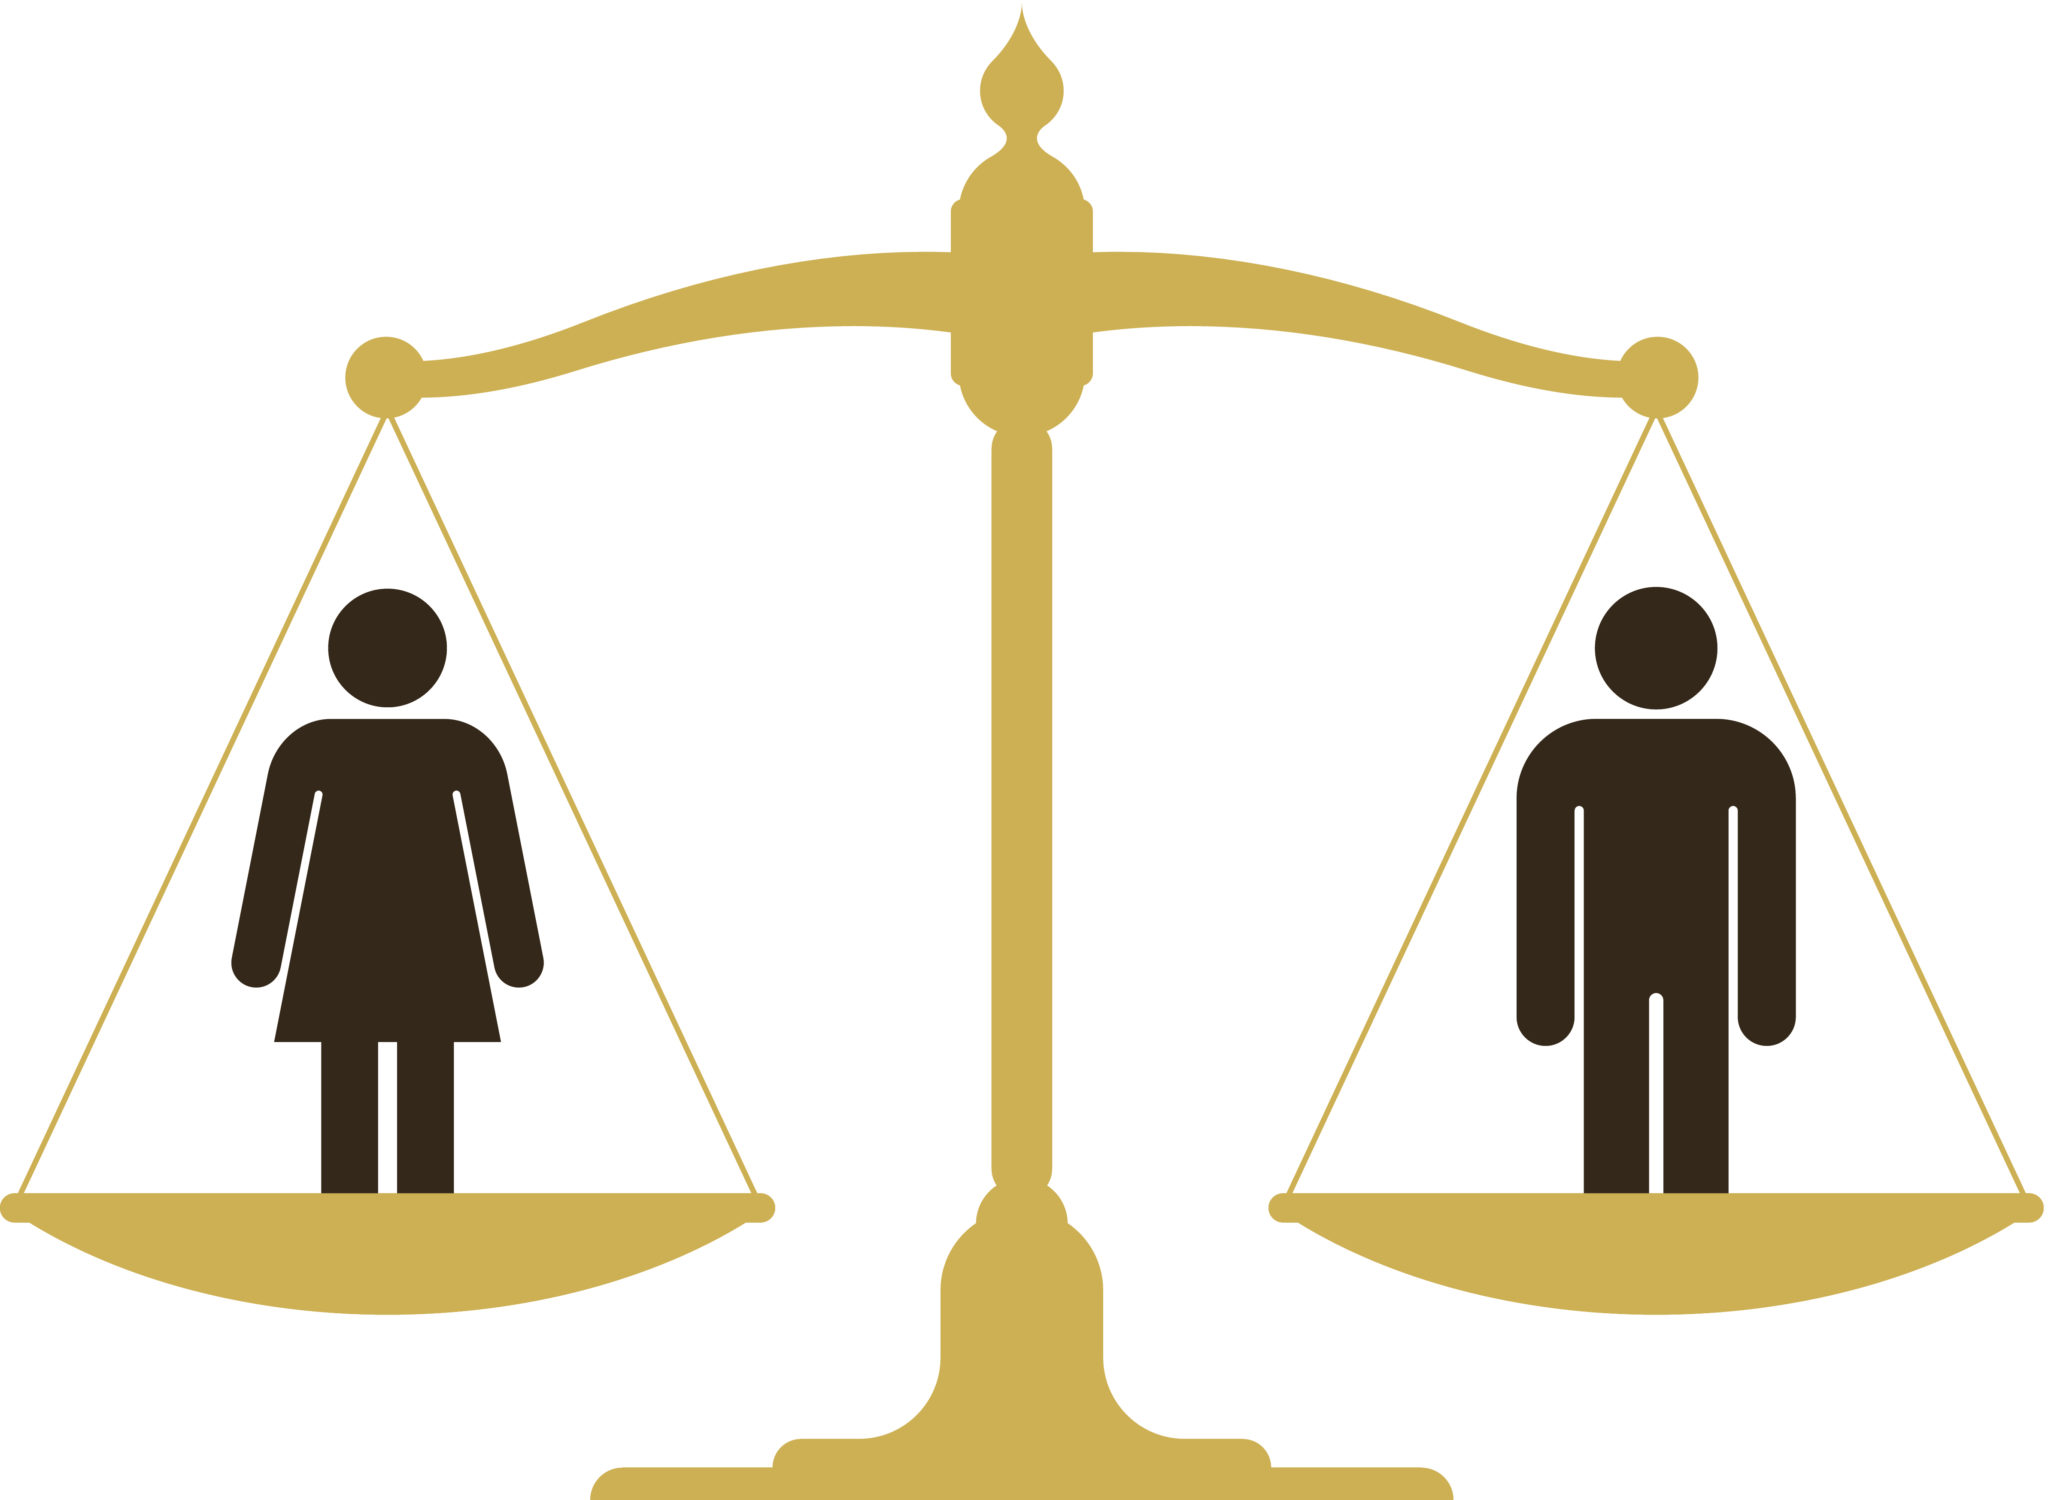 balance clipart equality